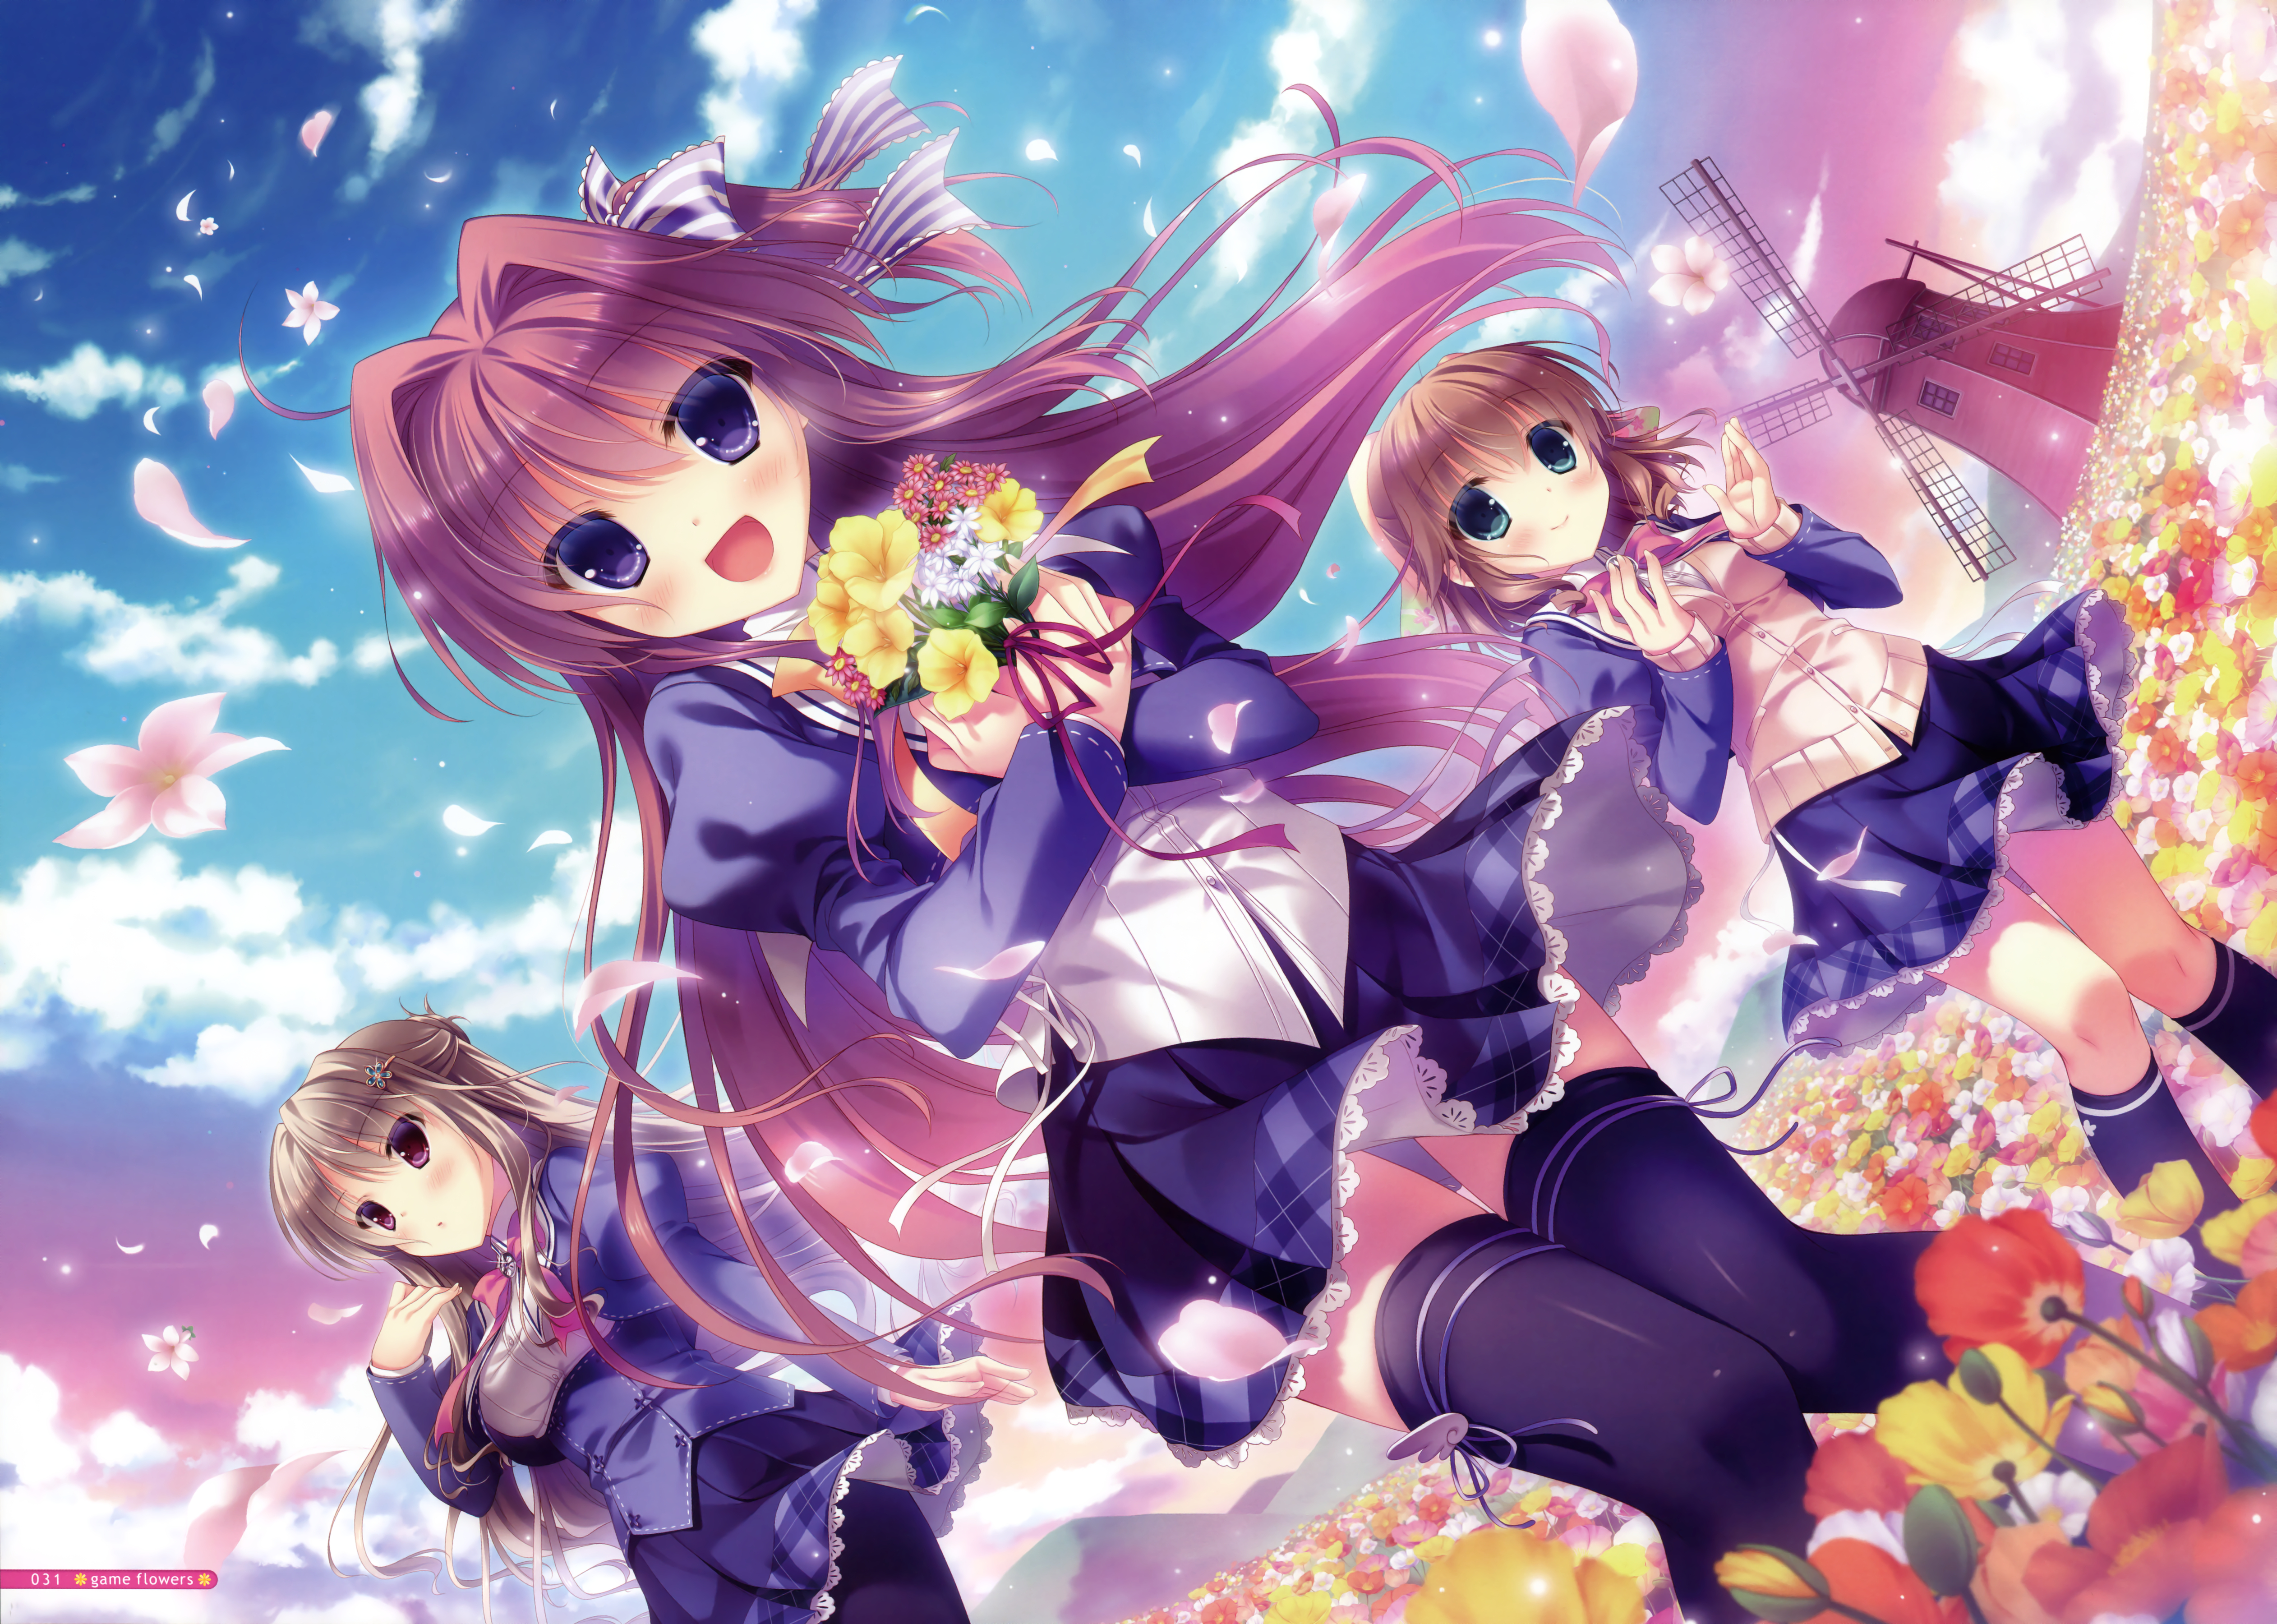 Kimi E Okuru Sora No Hana Backgrounds, Compatible - PC, Mobile, Gadgets| 5048x3600 px